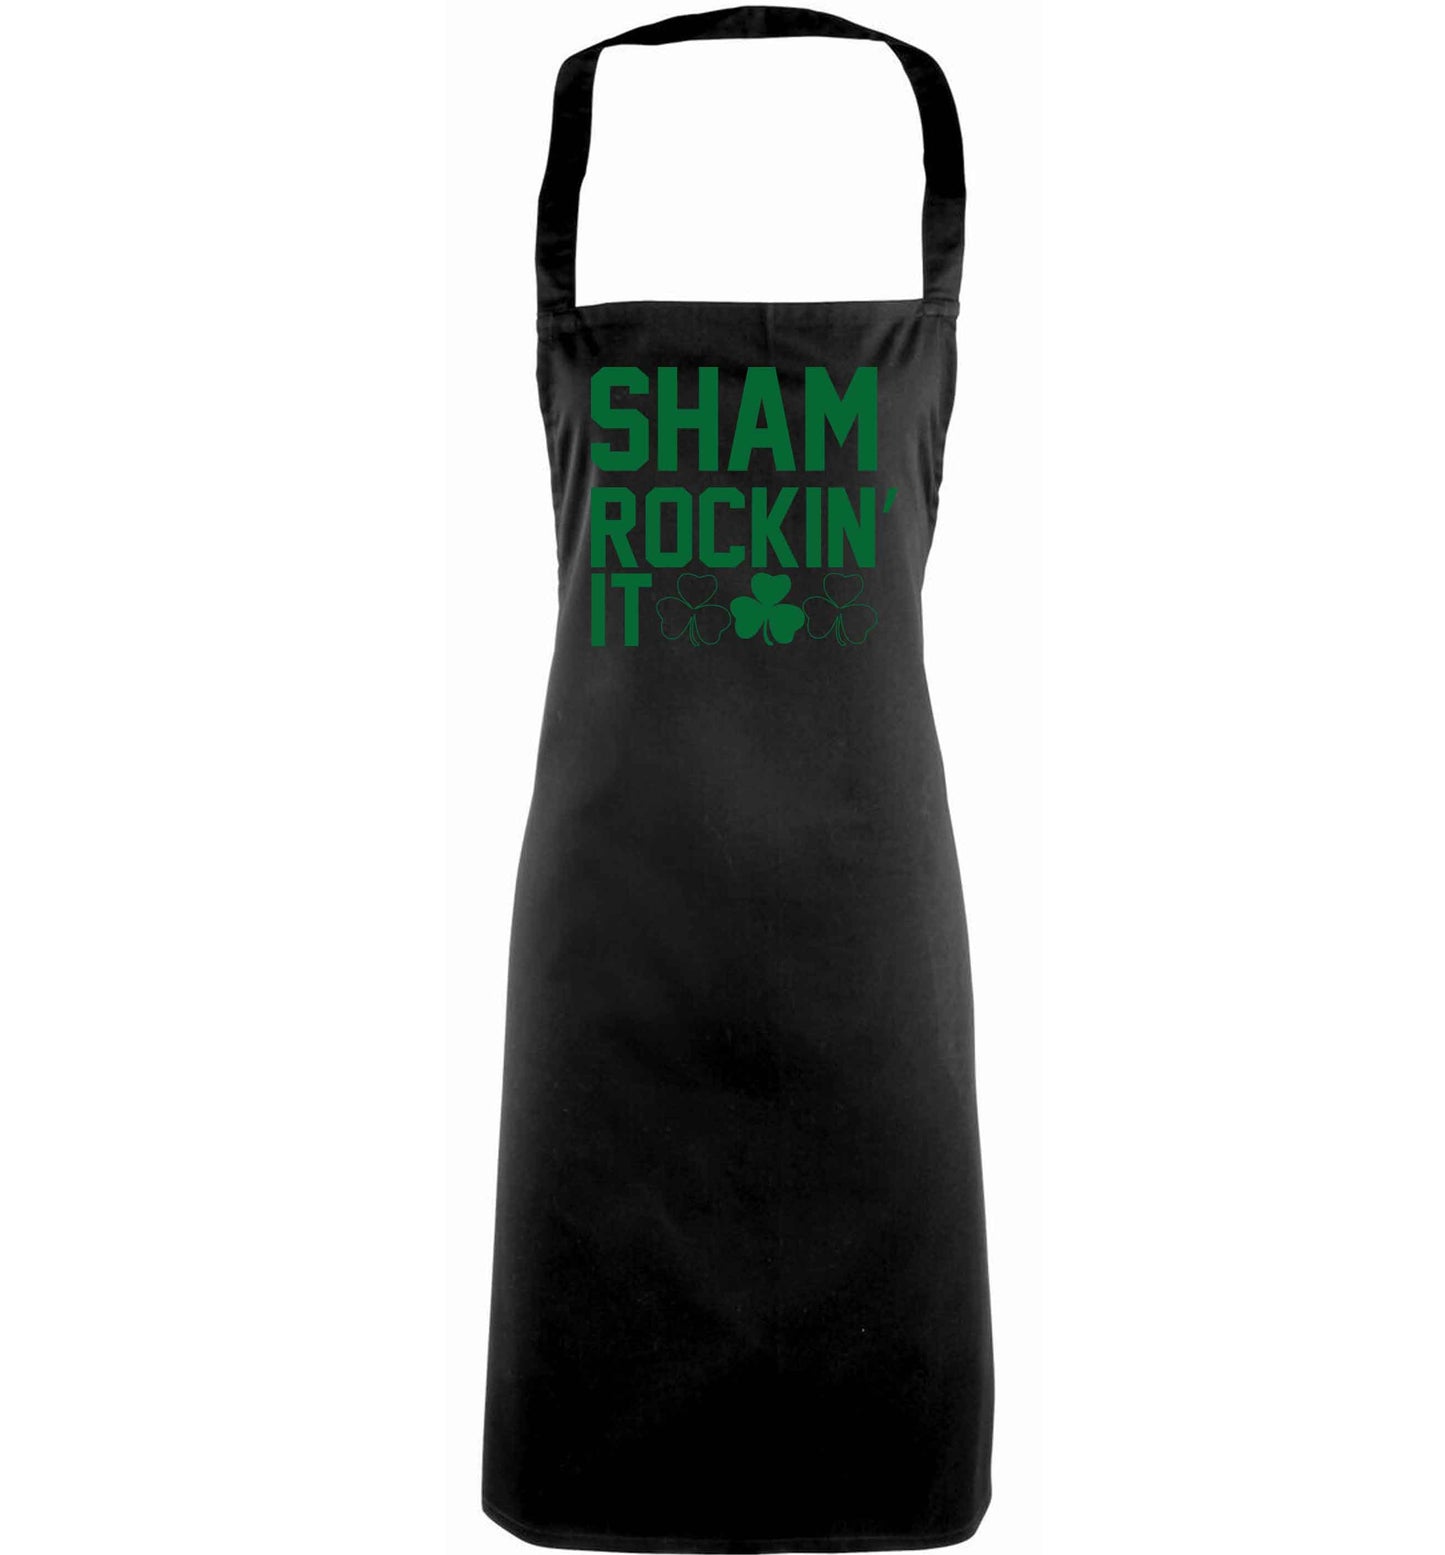 Shamrockin' it adults black apron